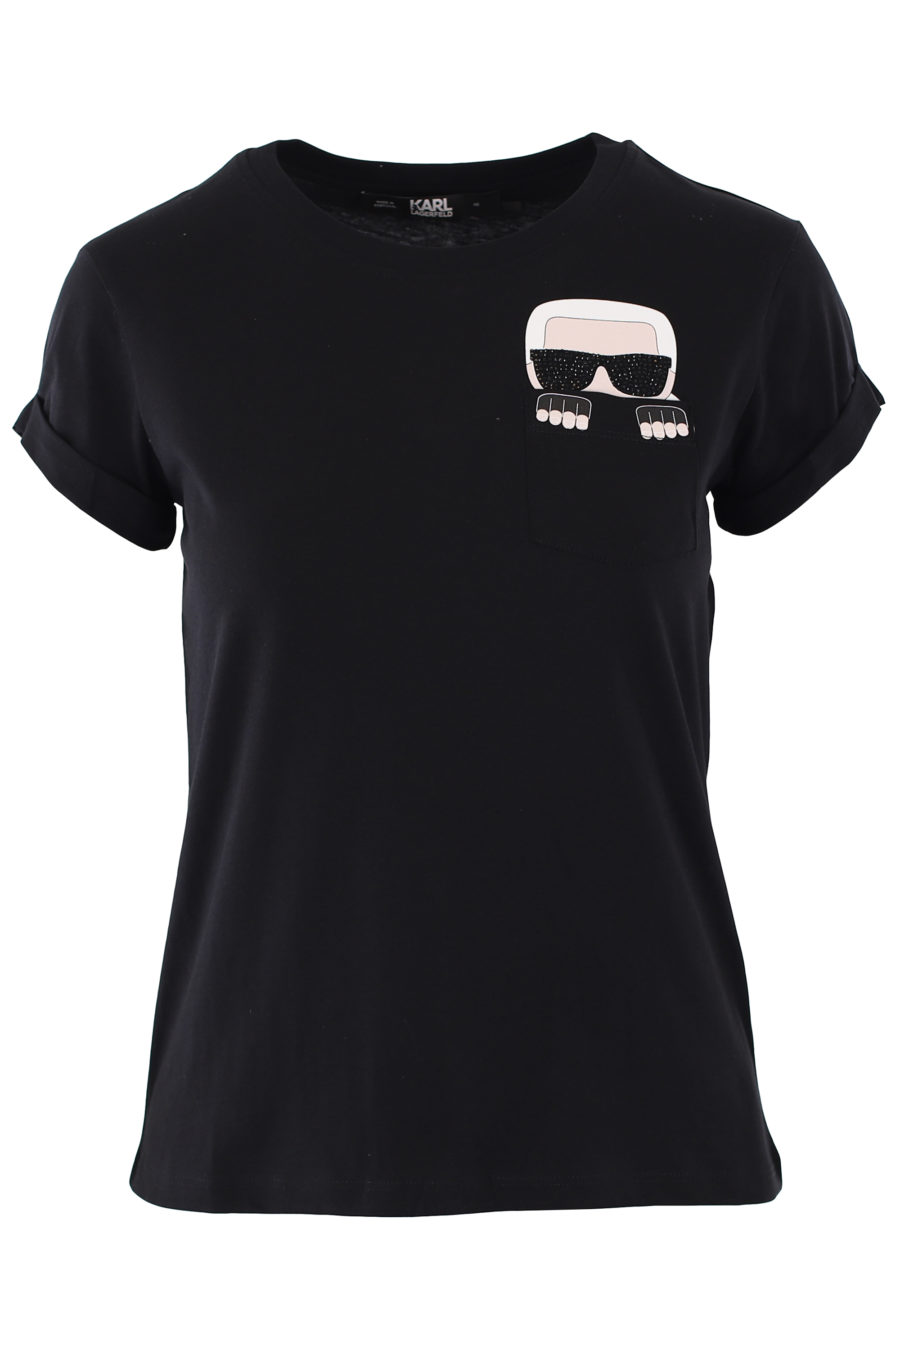 Camiseta negra con logo y bolsillo - IMG 1298